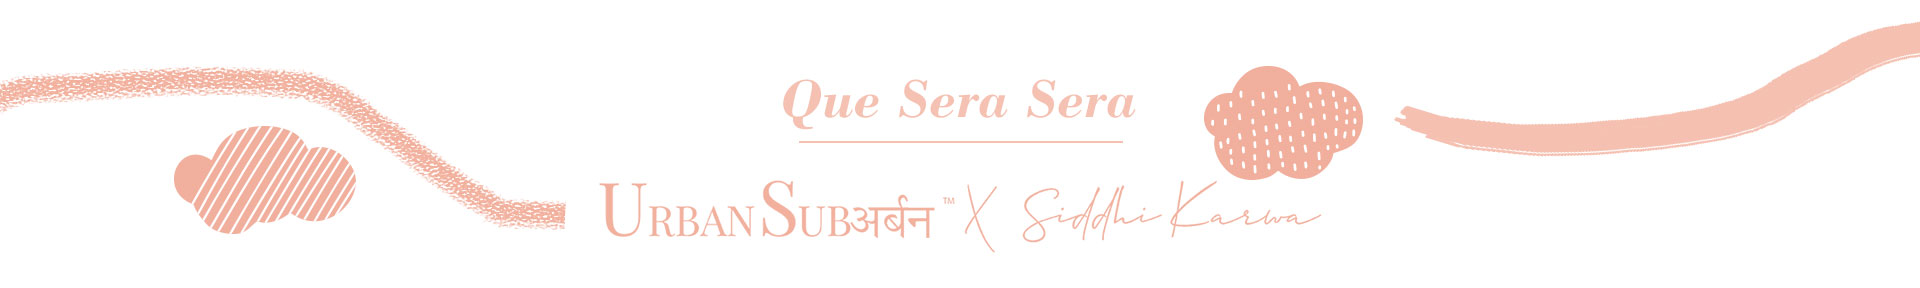 Urban Suburban X Siddhi Karwa